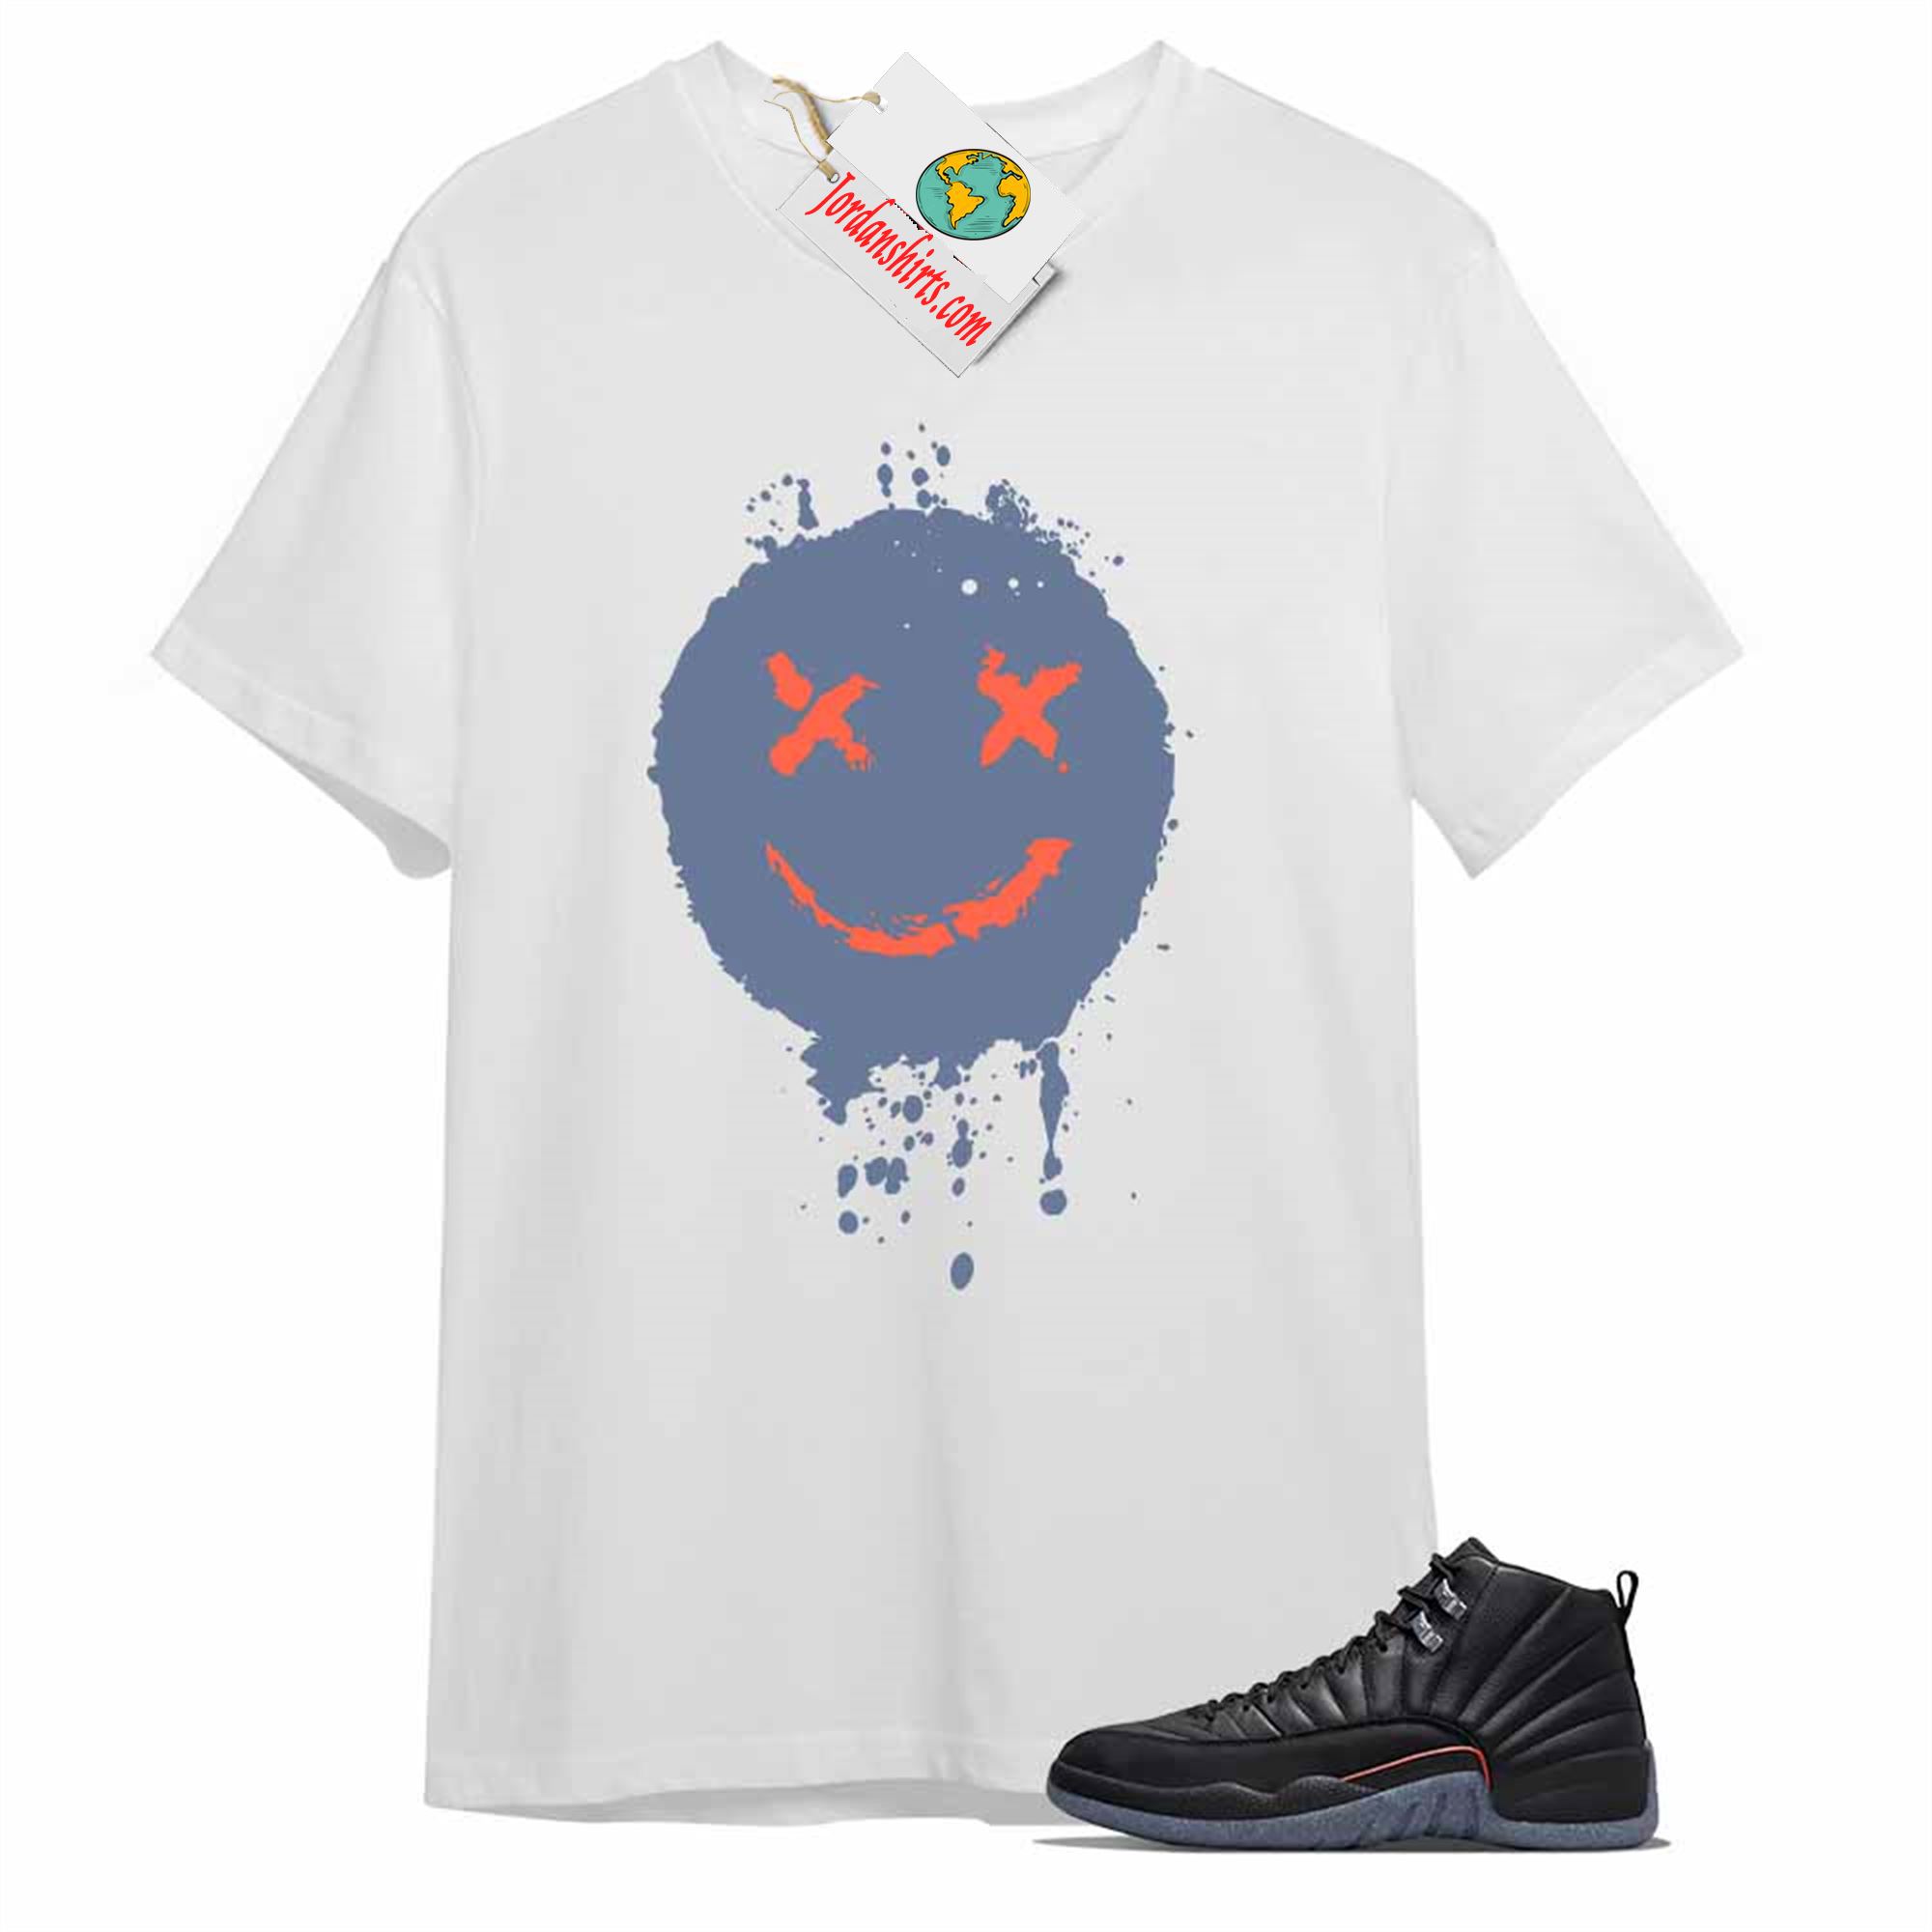 Jordan 12 Shirt, Smile Happy Face White T-shirt Air Jordan 12 Utility Grind 12s Plus Size Up To 5xl